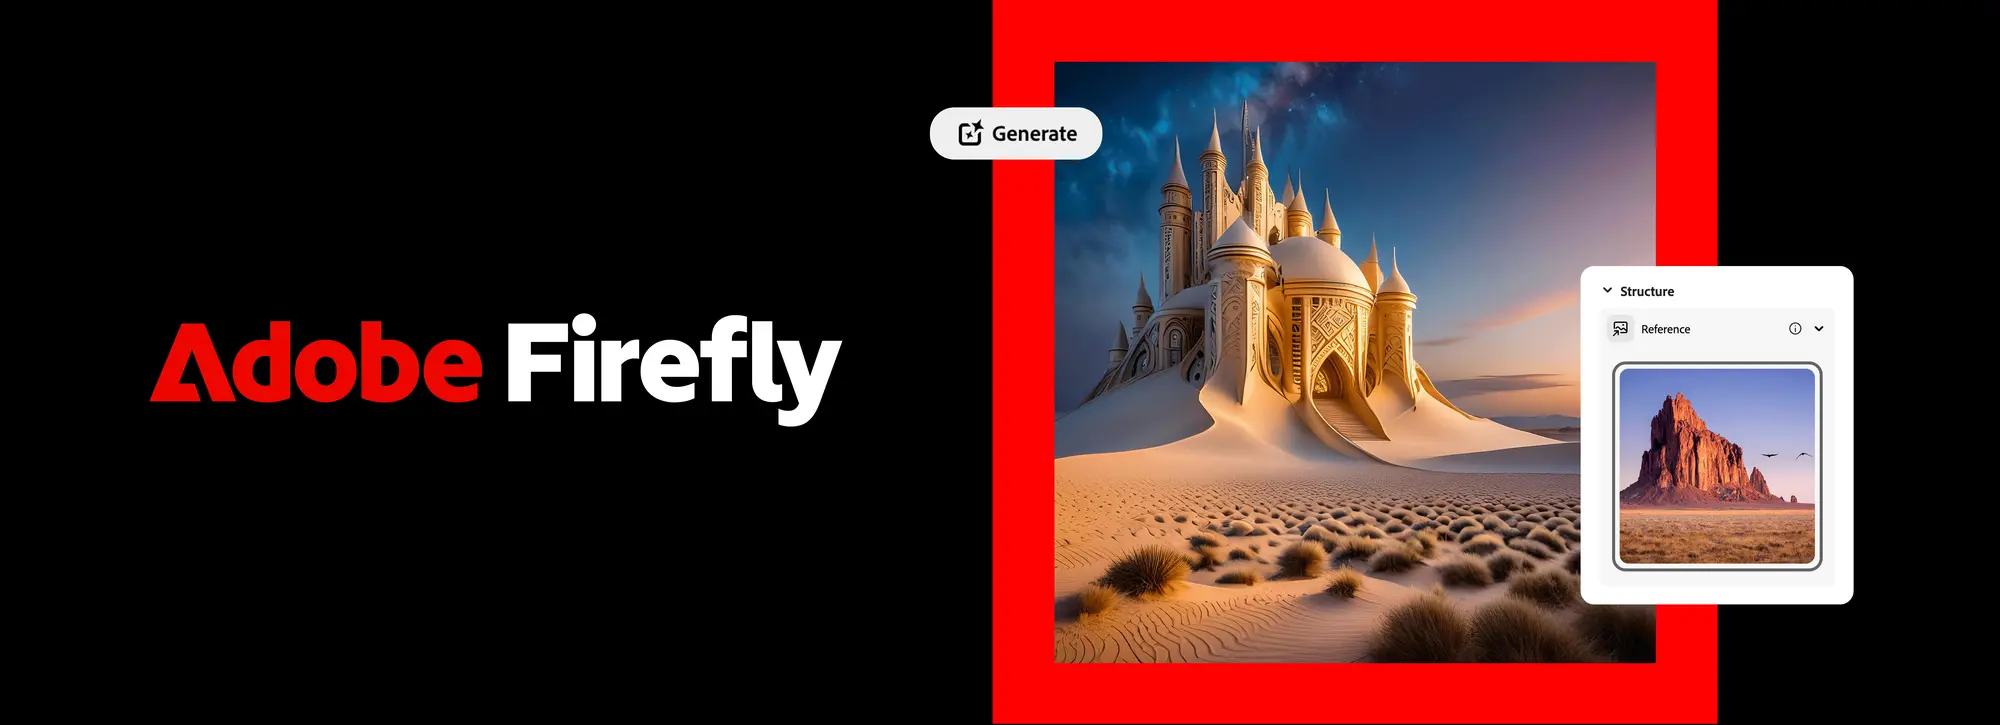 Adobe new firefly capabilities